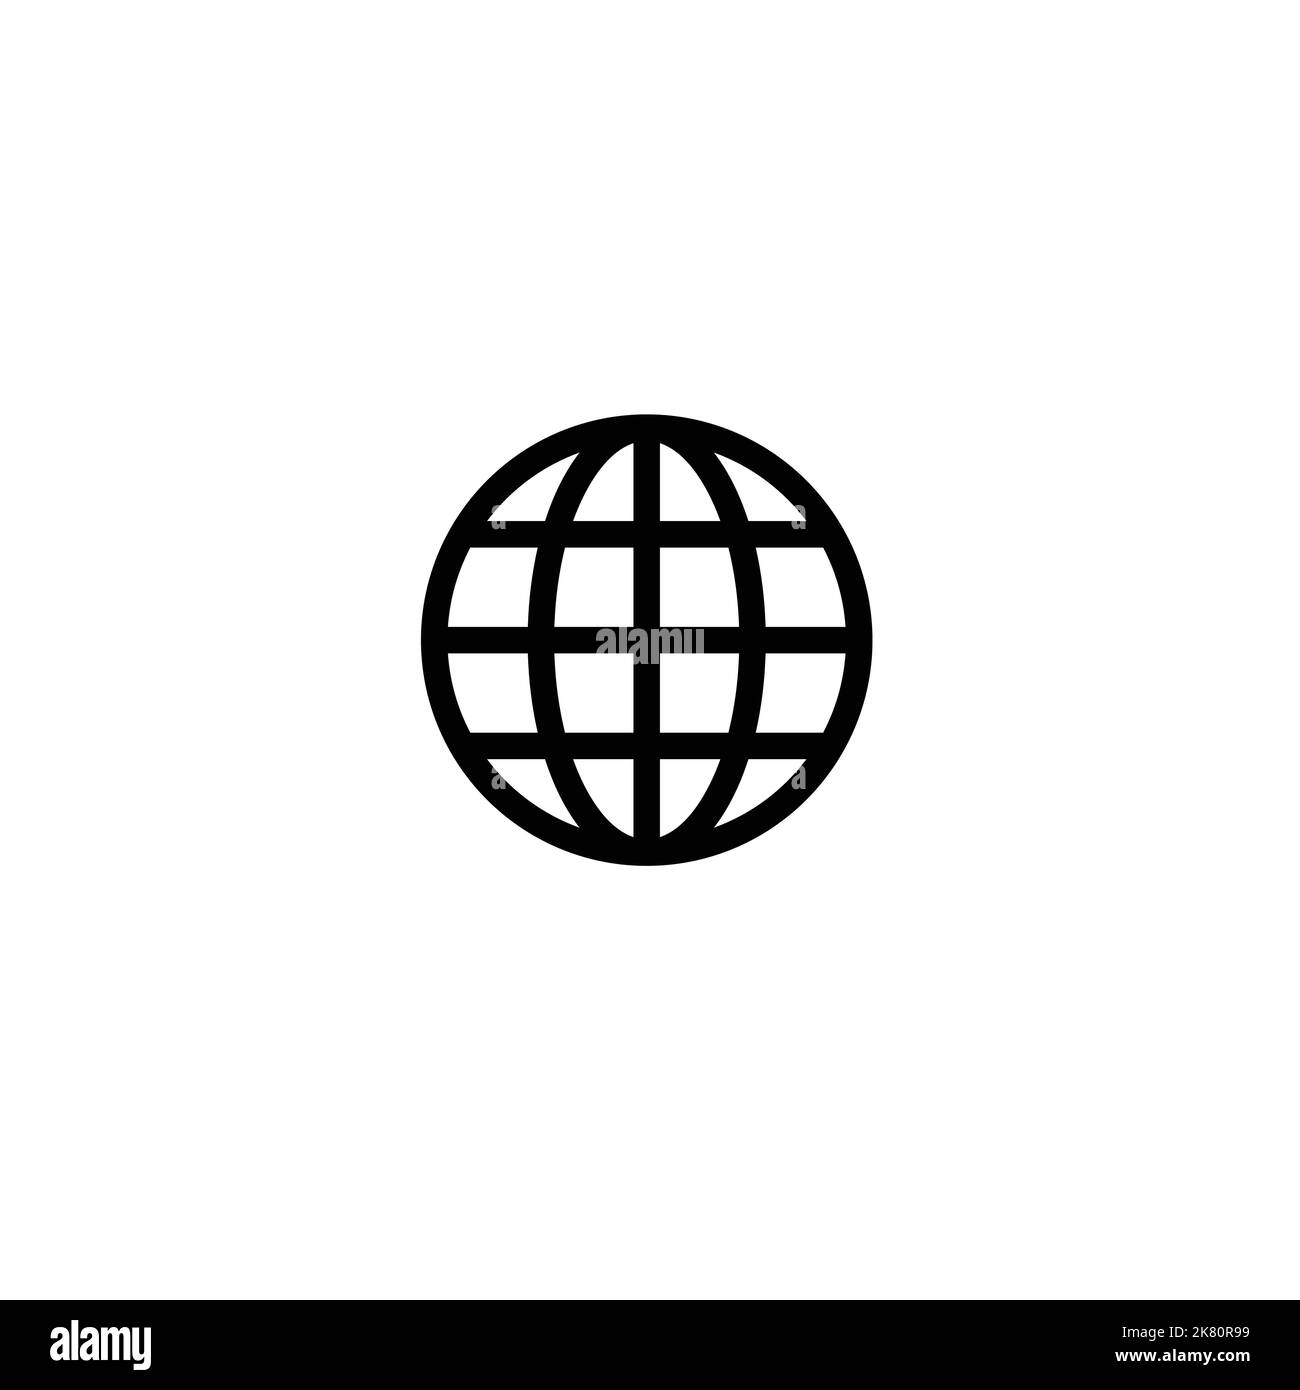 black single round globe icon, logo type for app, websites. in outline shape vector illustration on white isolated background. Stock Vector